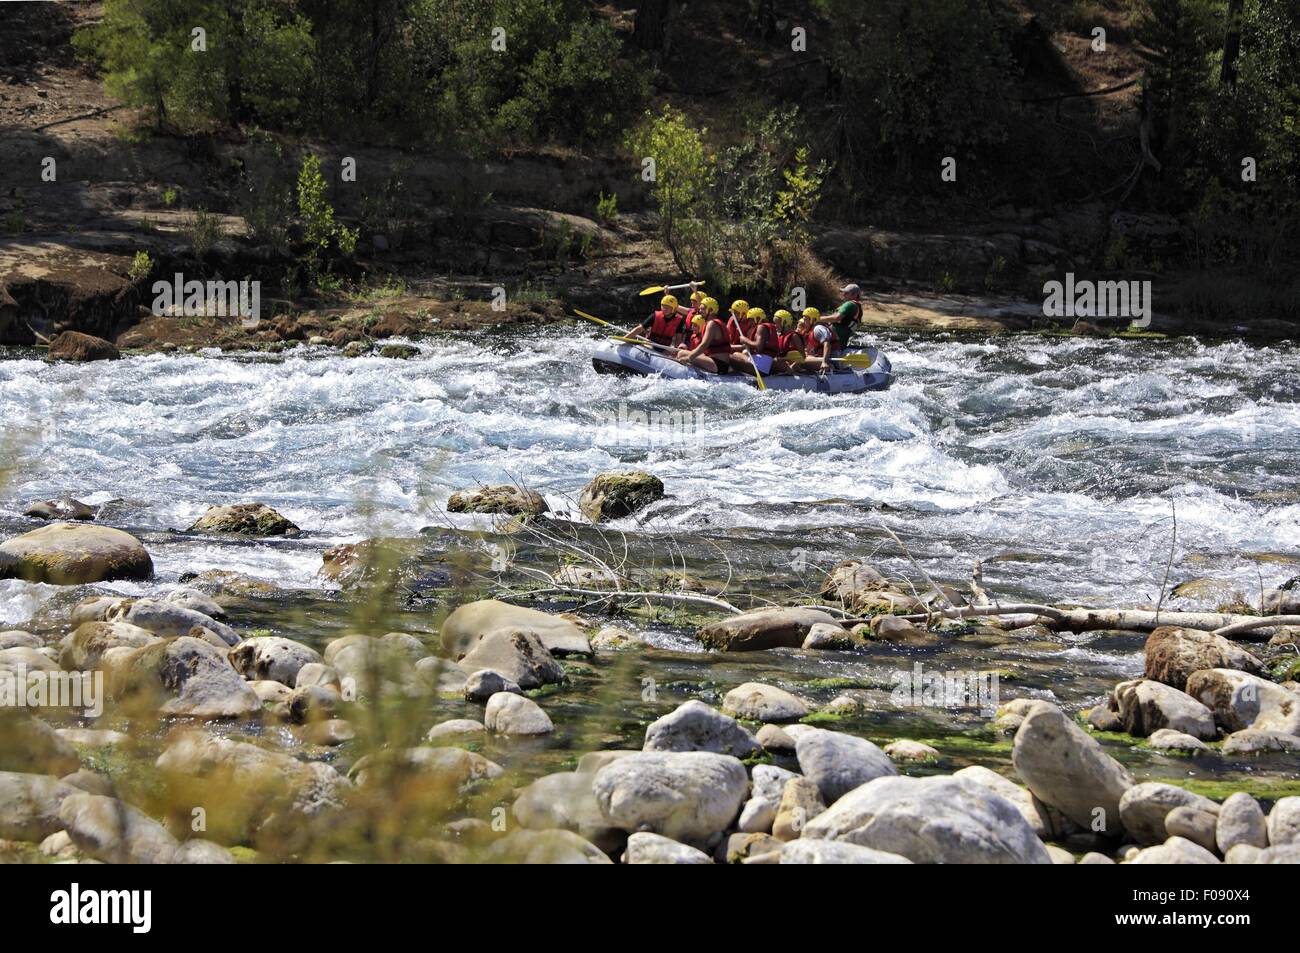 Tourists doing rapid rafting in Koprulu Canyon, Turkey Stock Photo